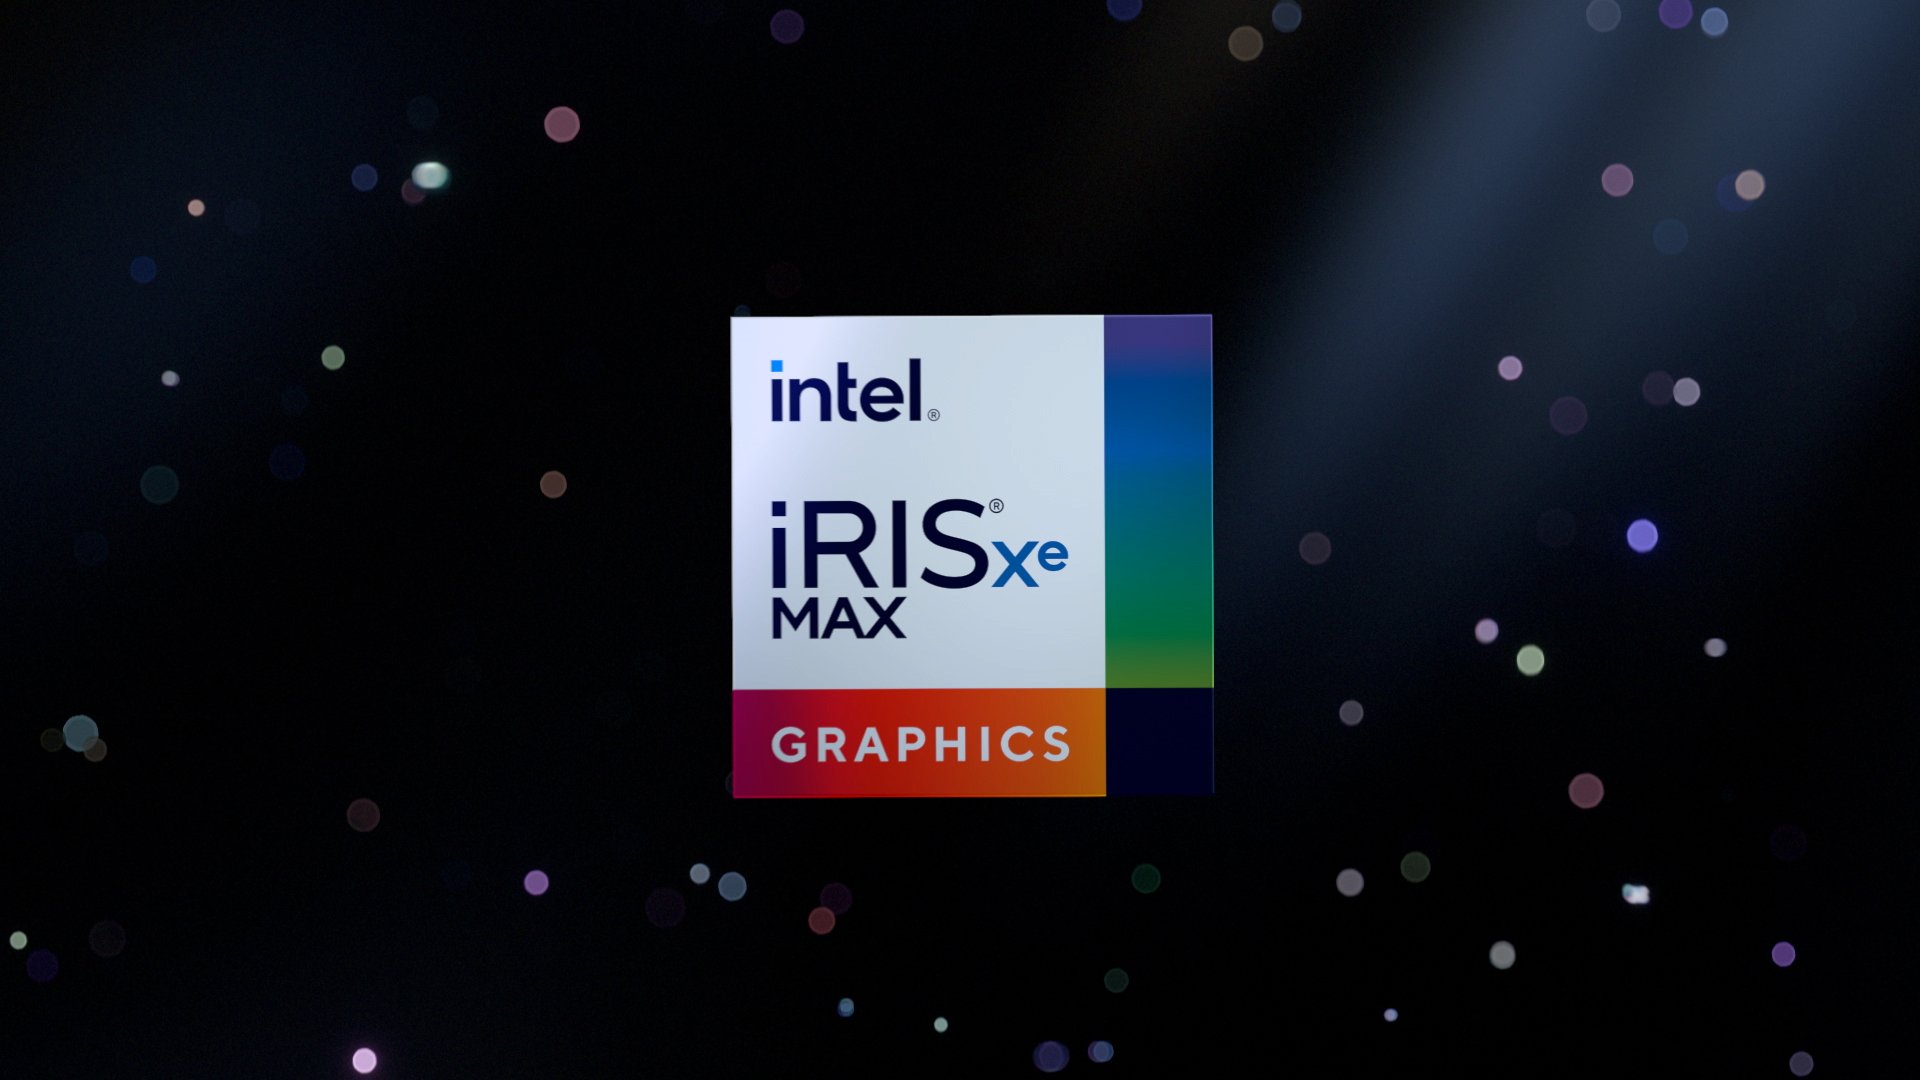 Intel Iris XE Max_IMAGES2242.jpg